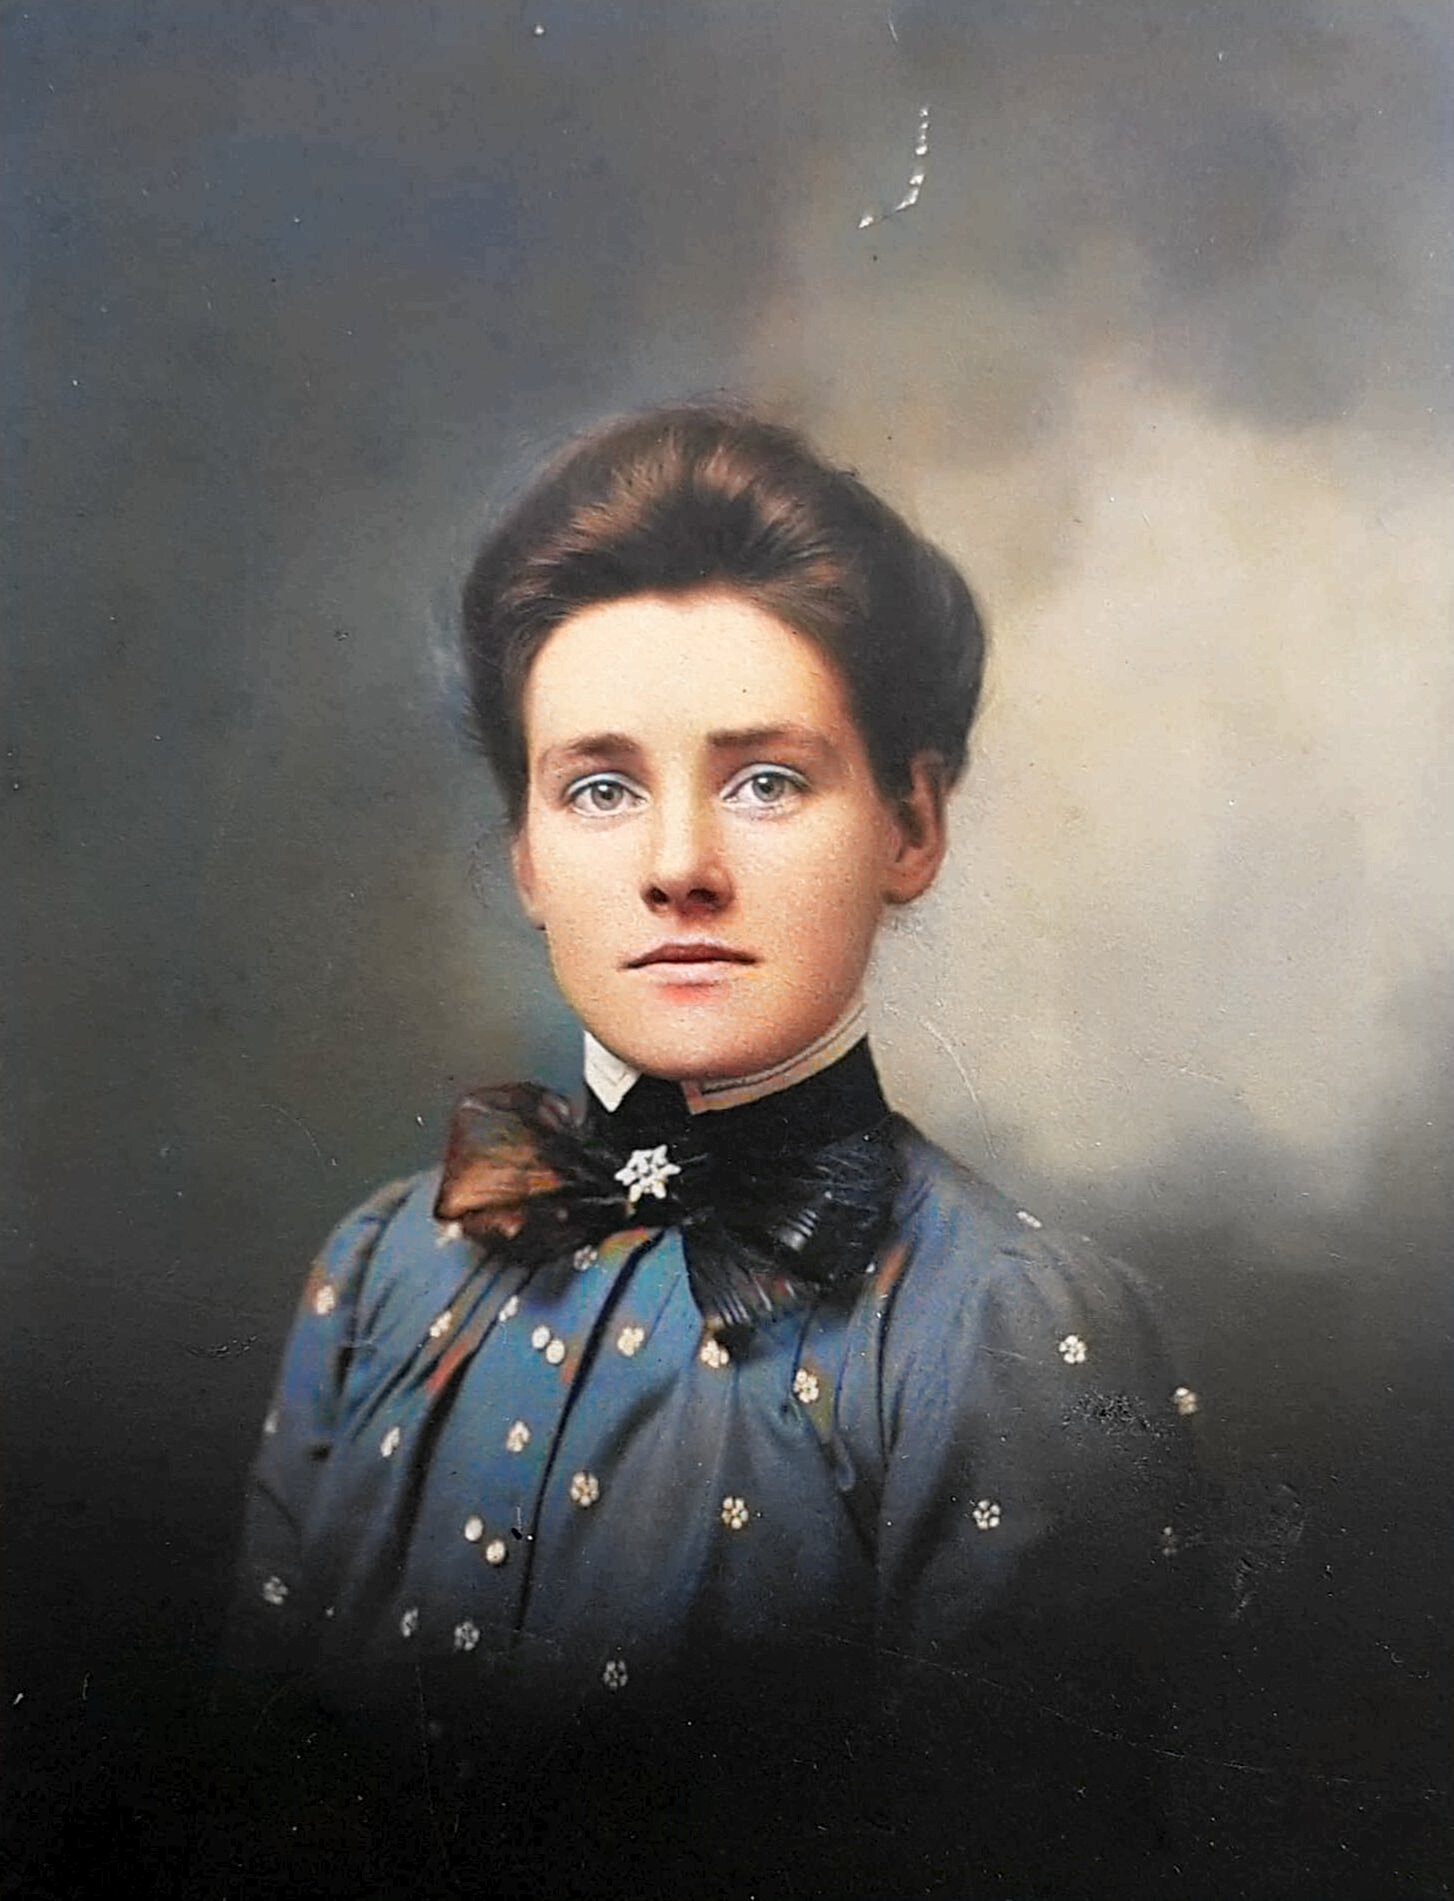 My grandmother Jenny Sandqvist, photo taken in New York around 1903